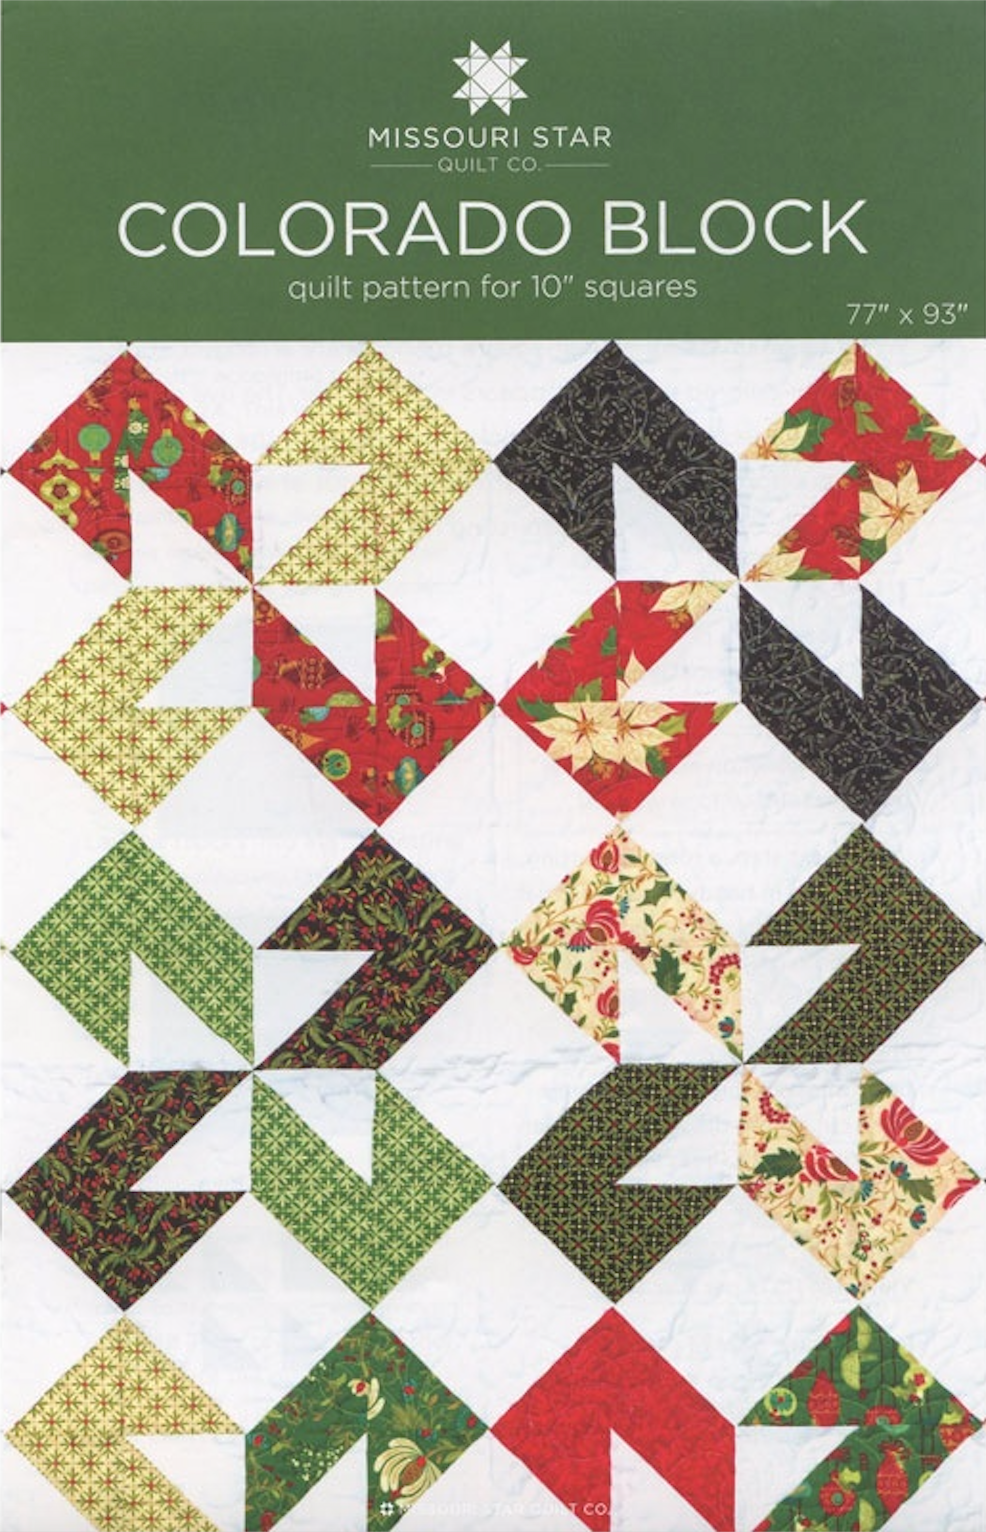 MSQC Quilt Pattern Colorado Block: Paper Pattern